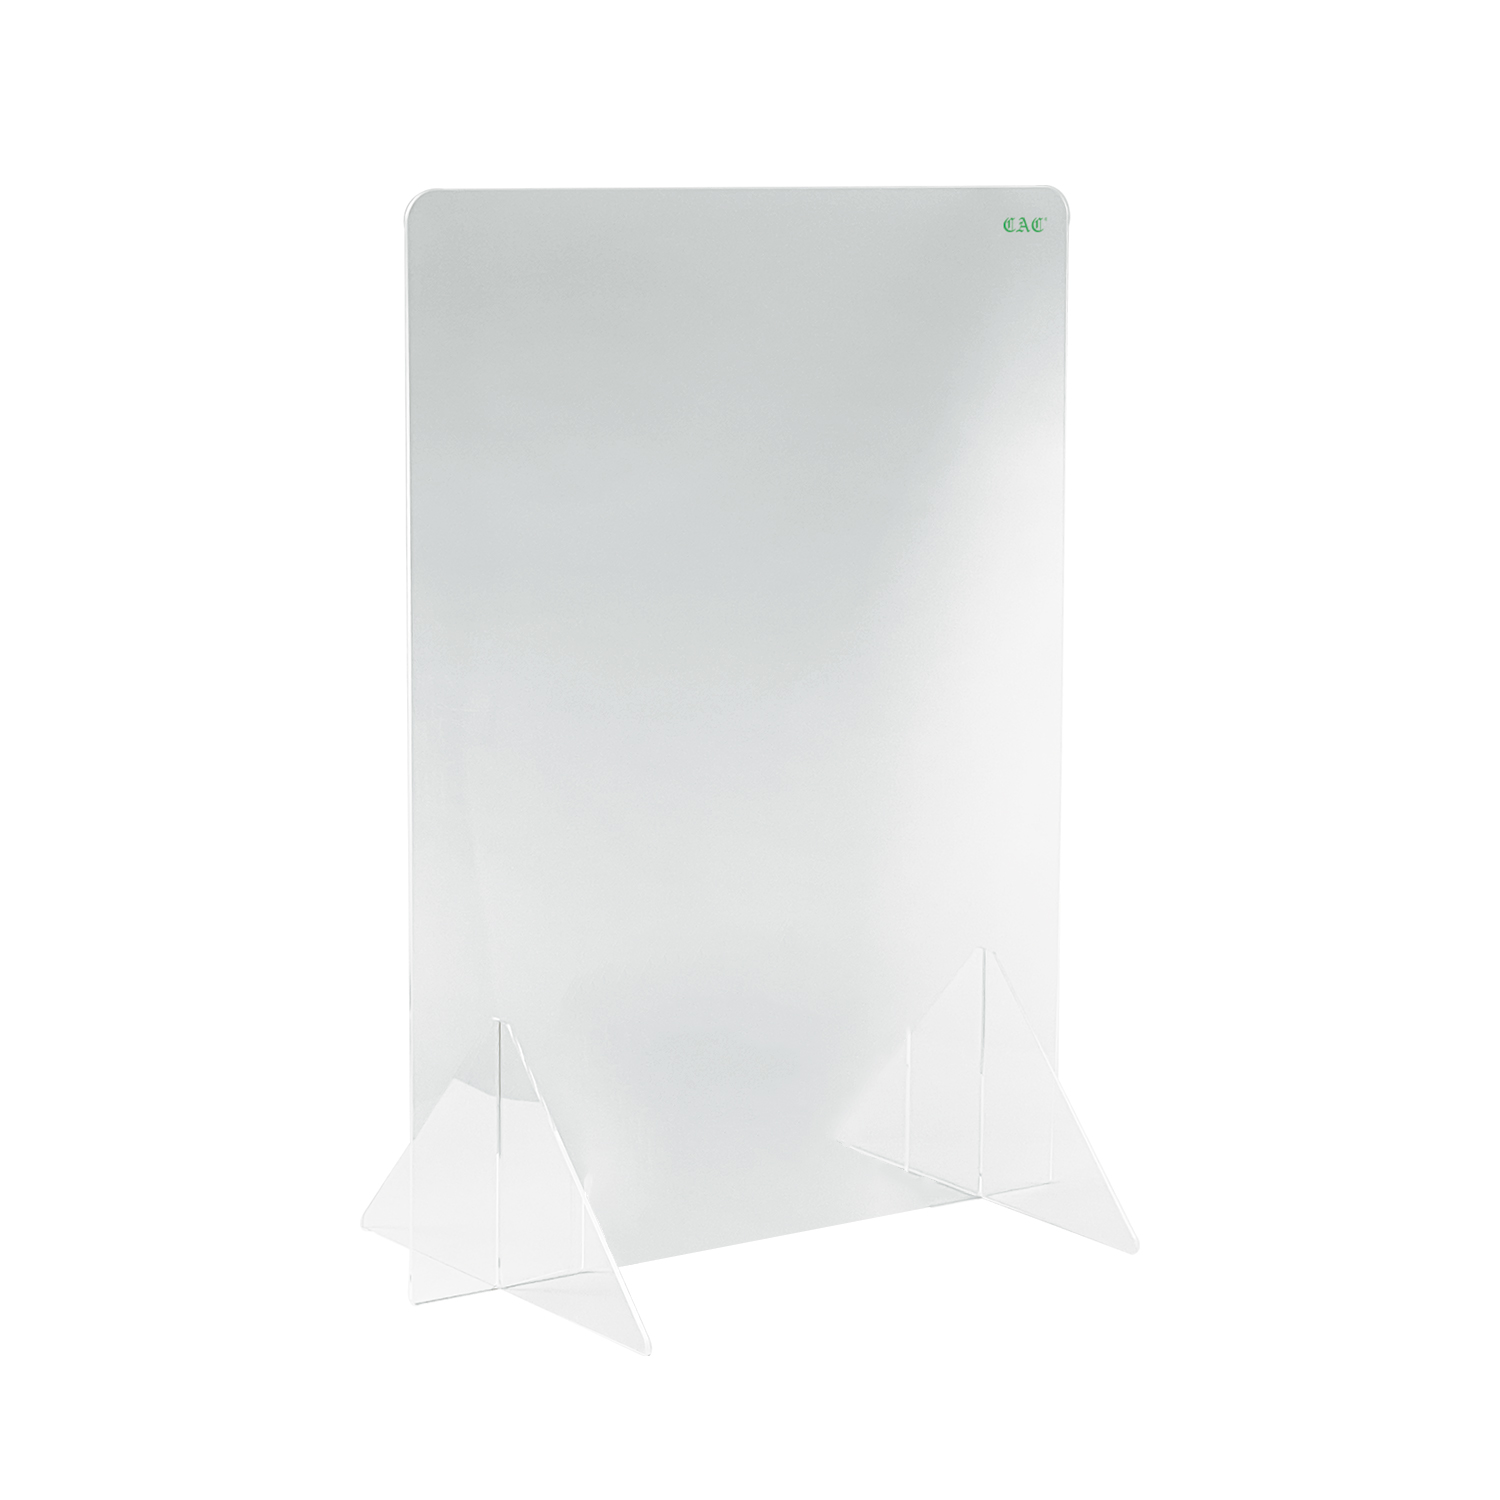 CAC China SHLD-2432N Self-Standing Acrylic Shield w/o Window 24" W x 32" H